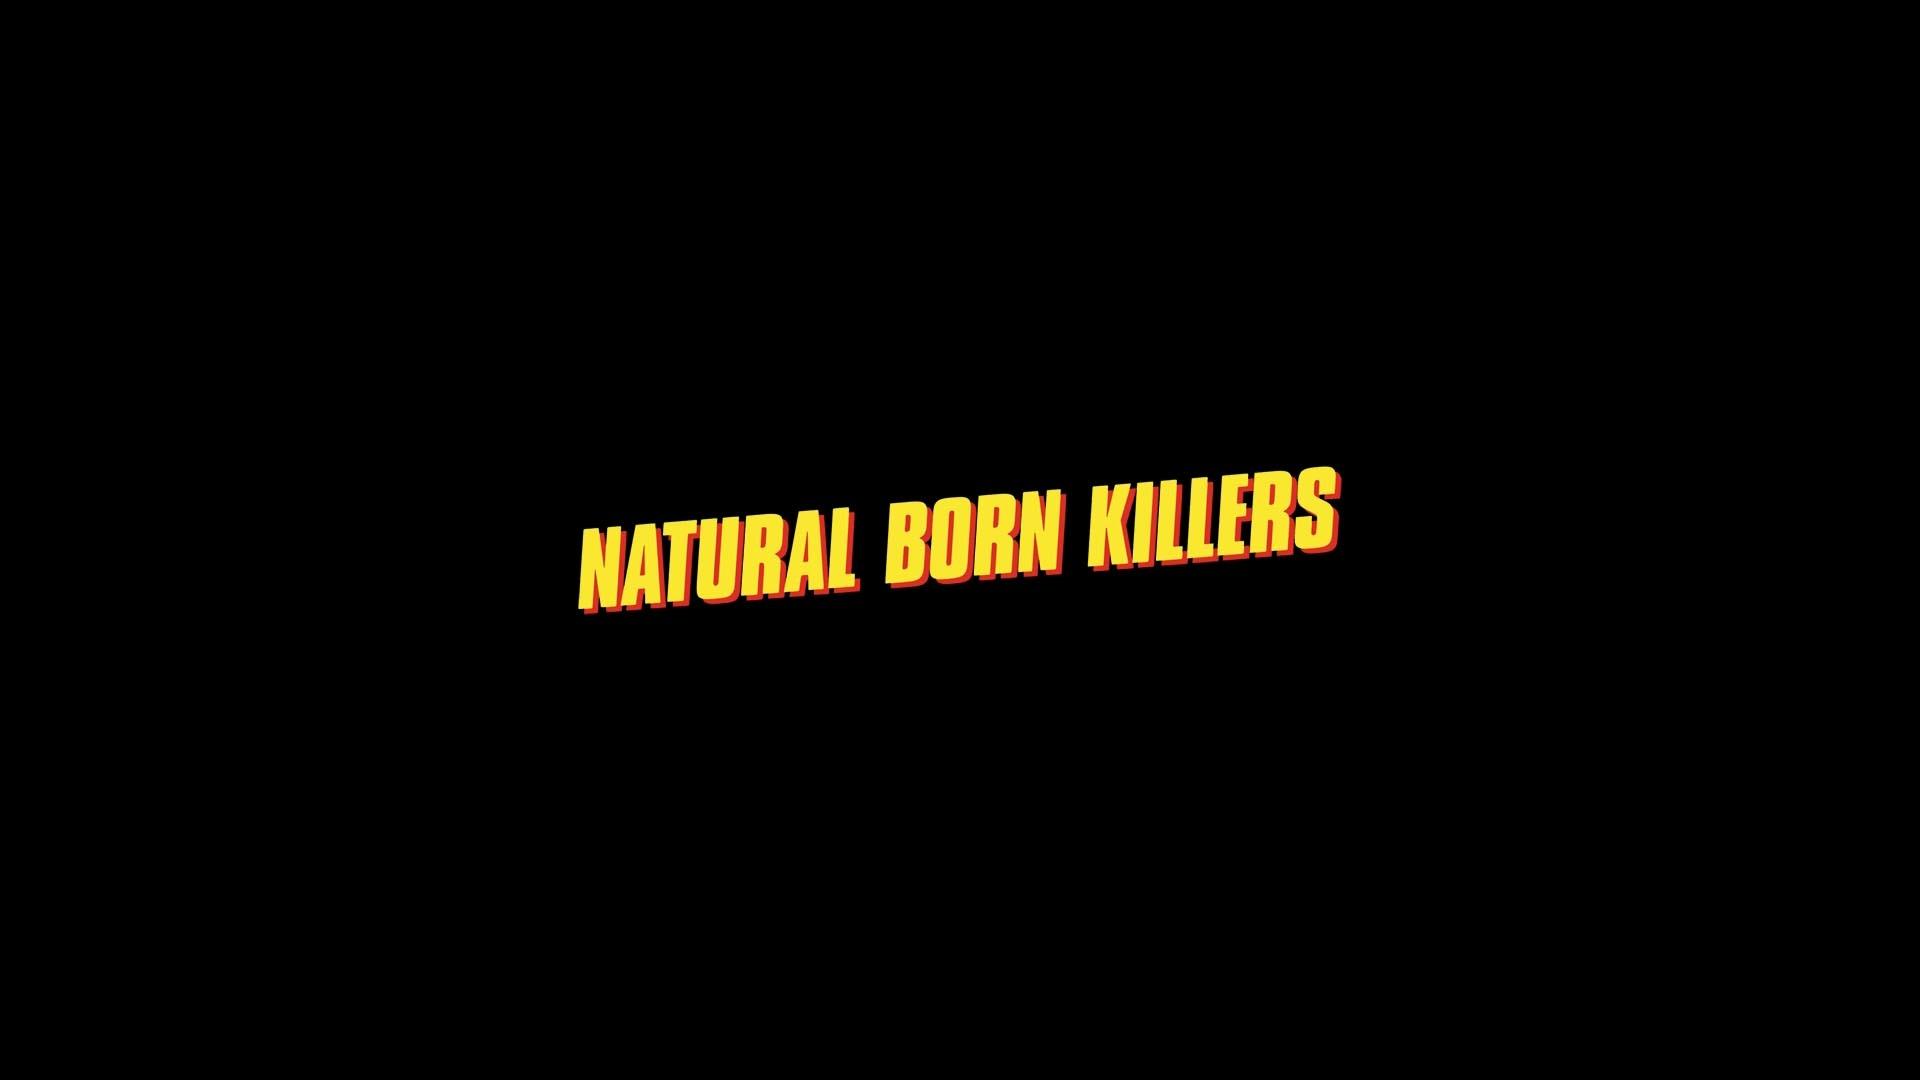 Natural Born Killers at 2048 x 2048 iPad size wallpapers HD quality